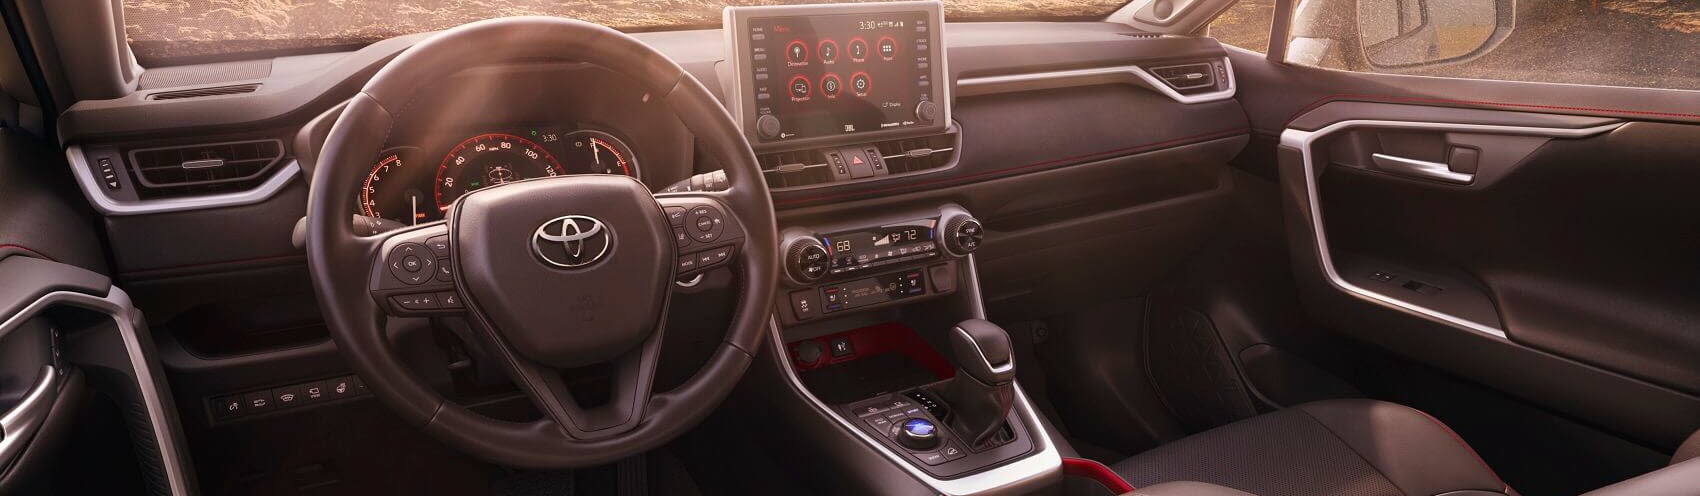 Toyota RAV4 Interior Technology